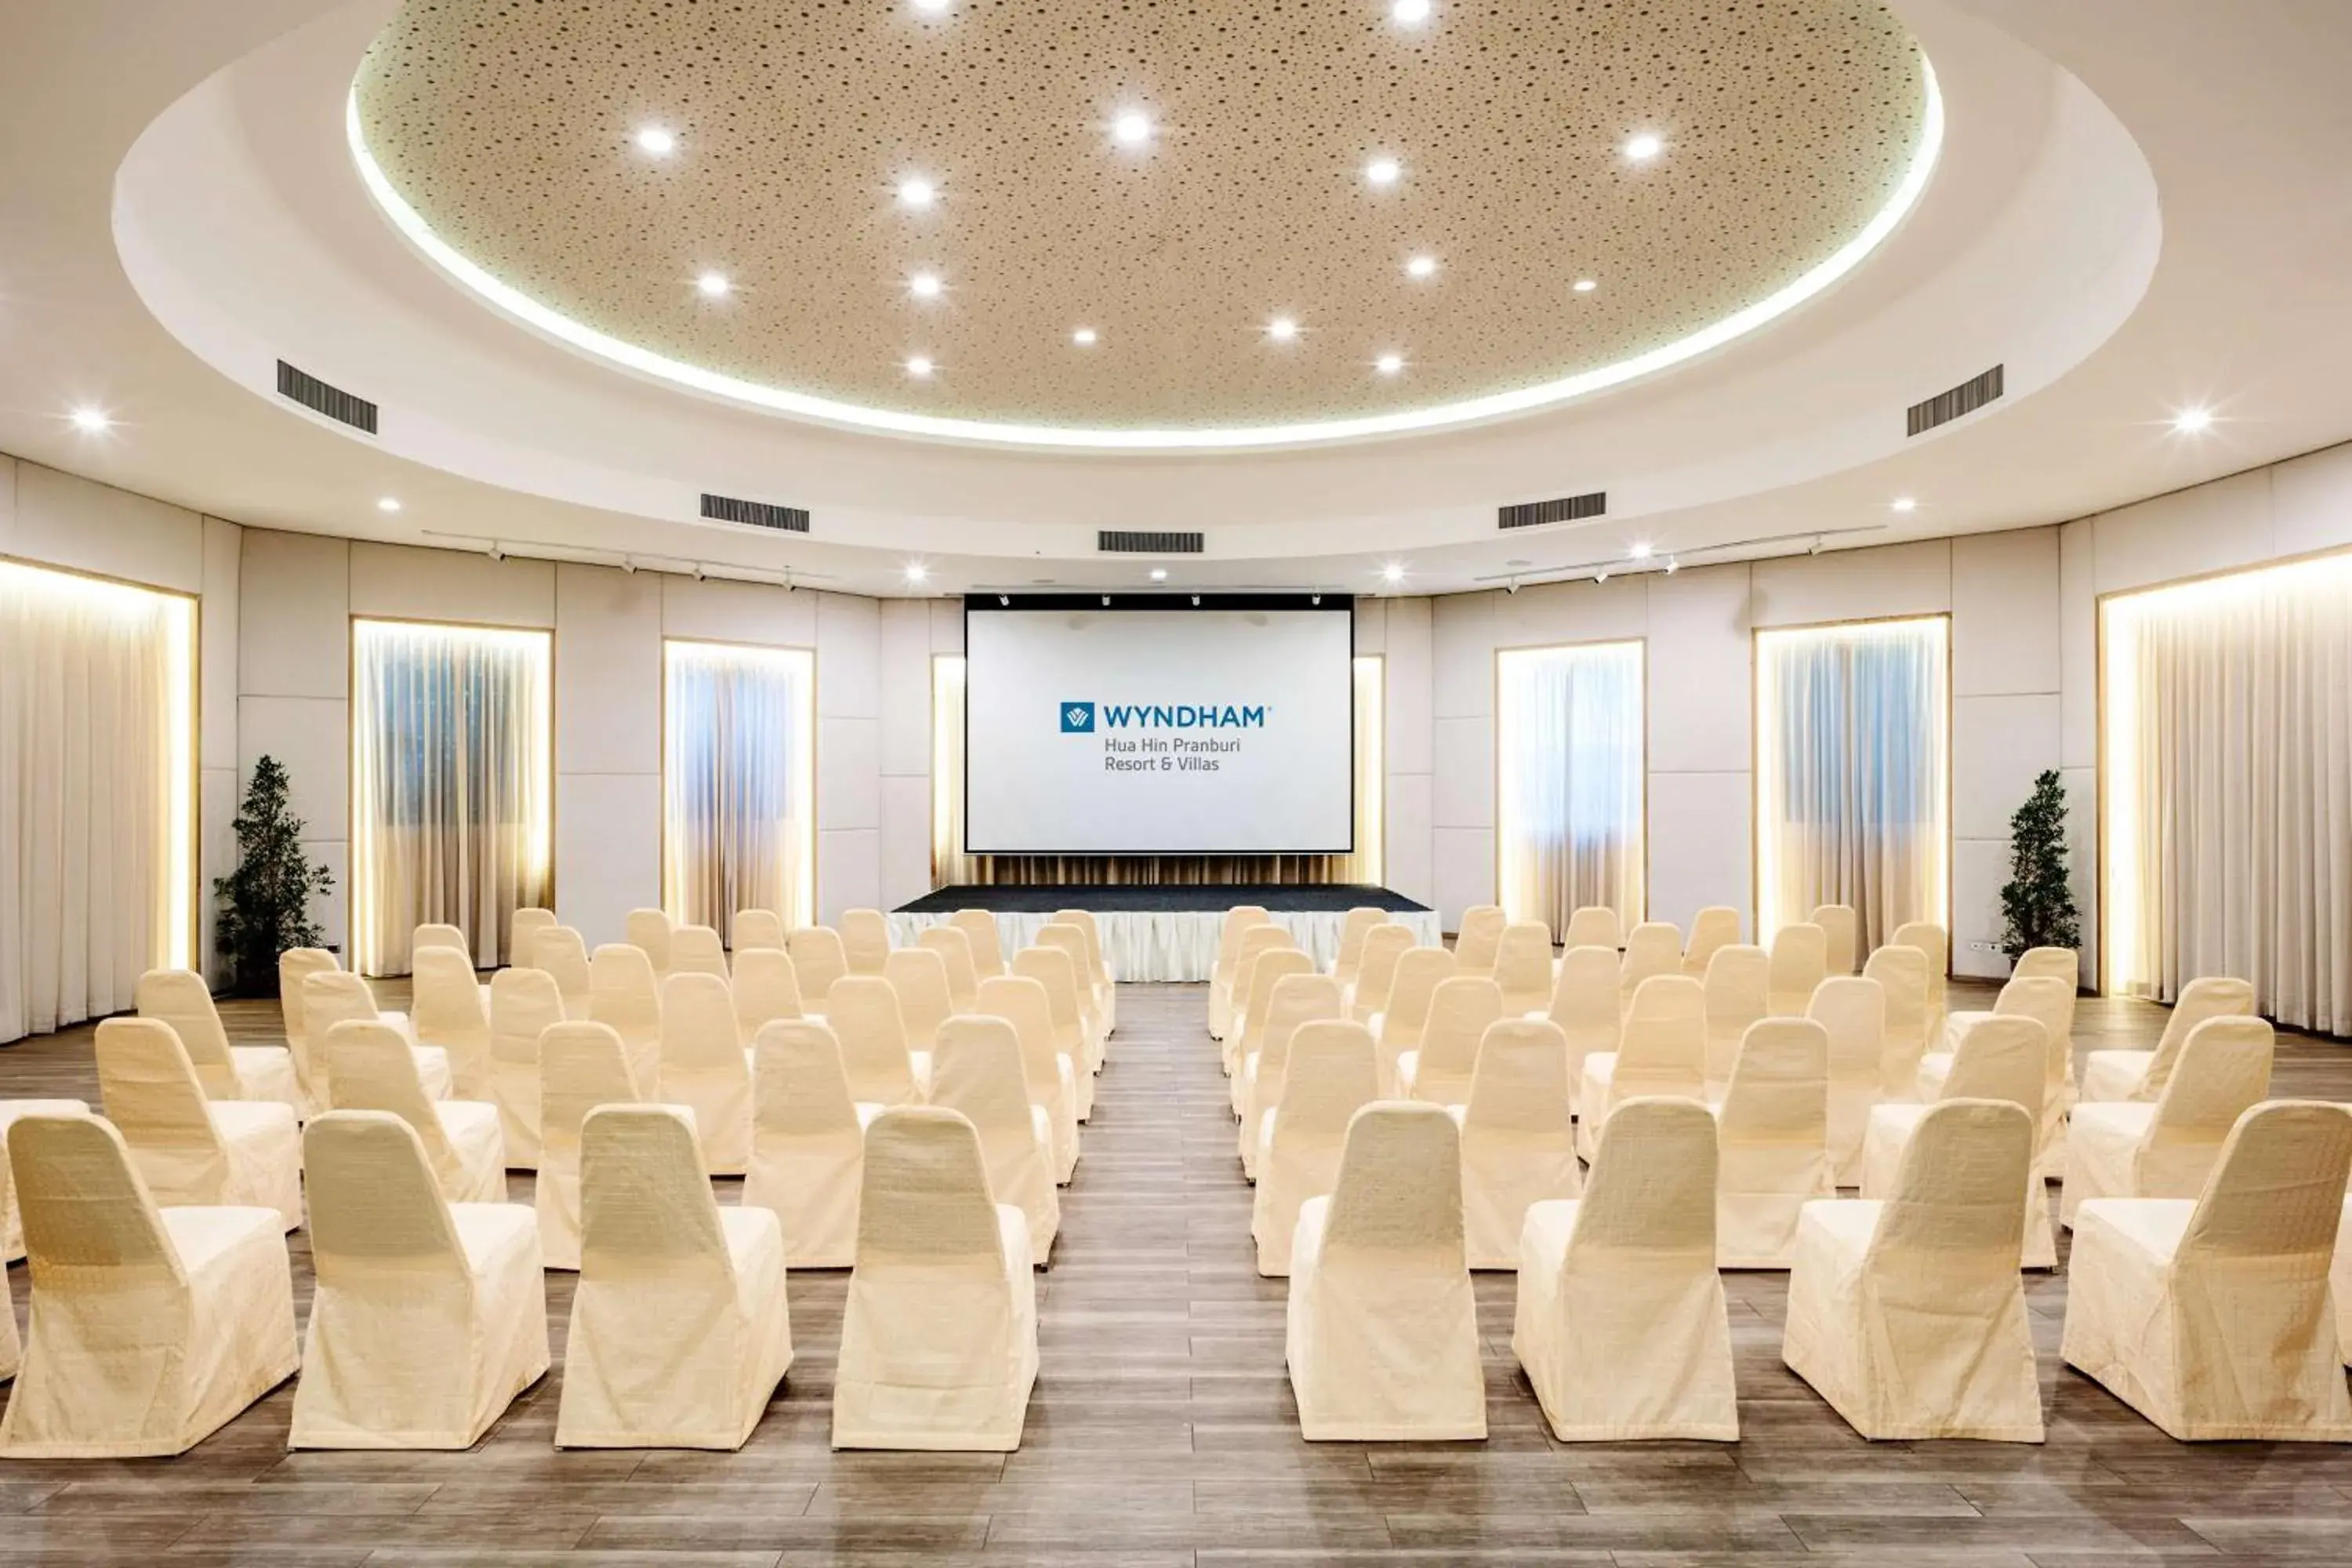 Meeting/conference room in Wyndham Hua Hin Pranburi Resort & Villas